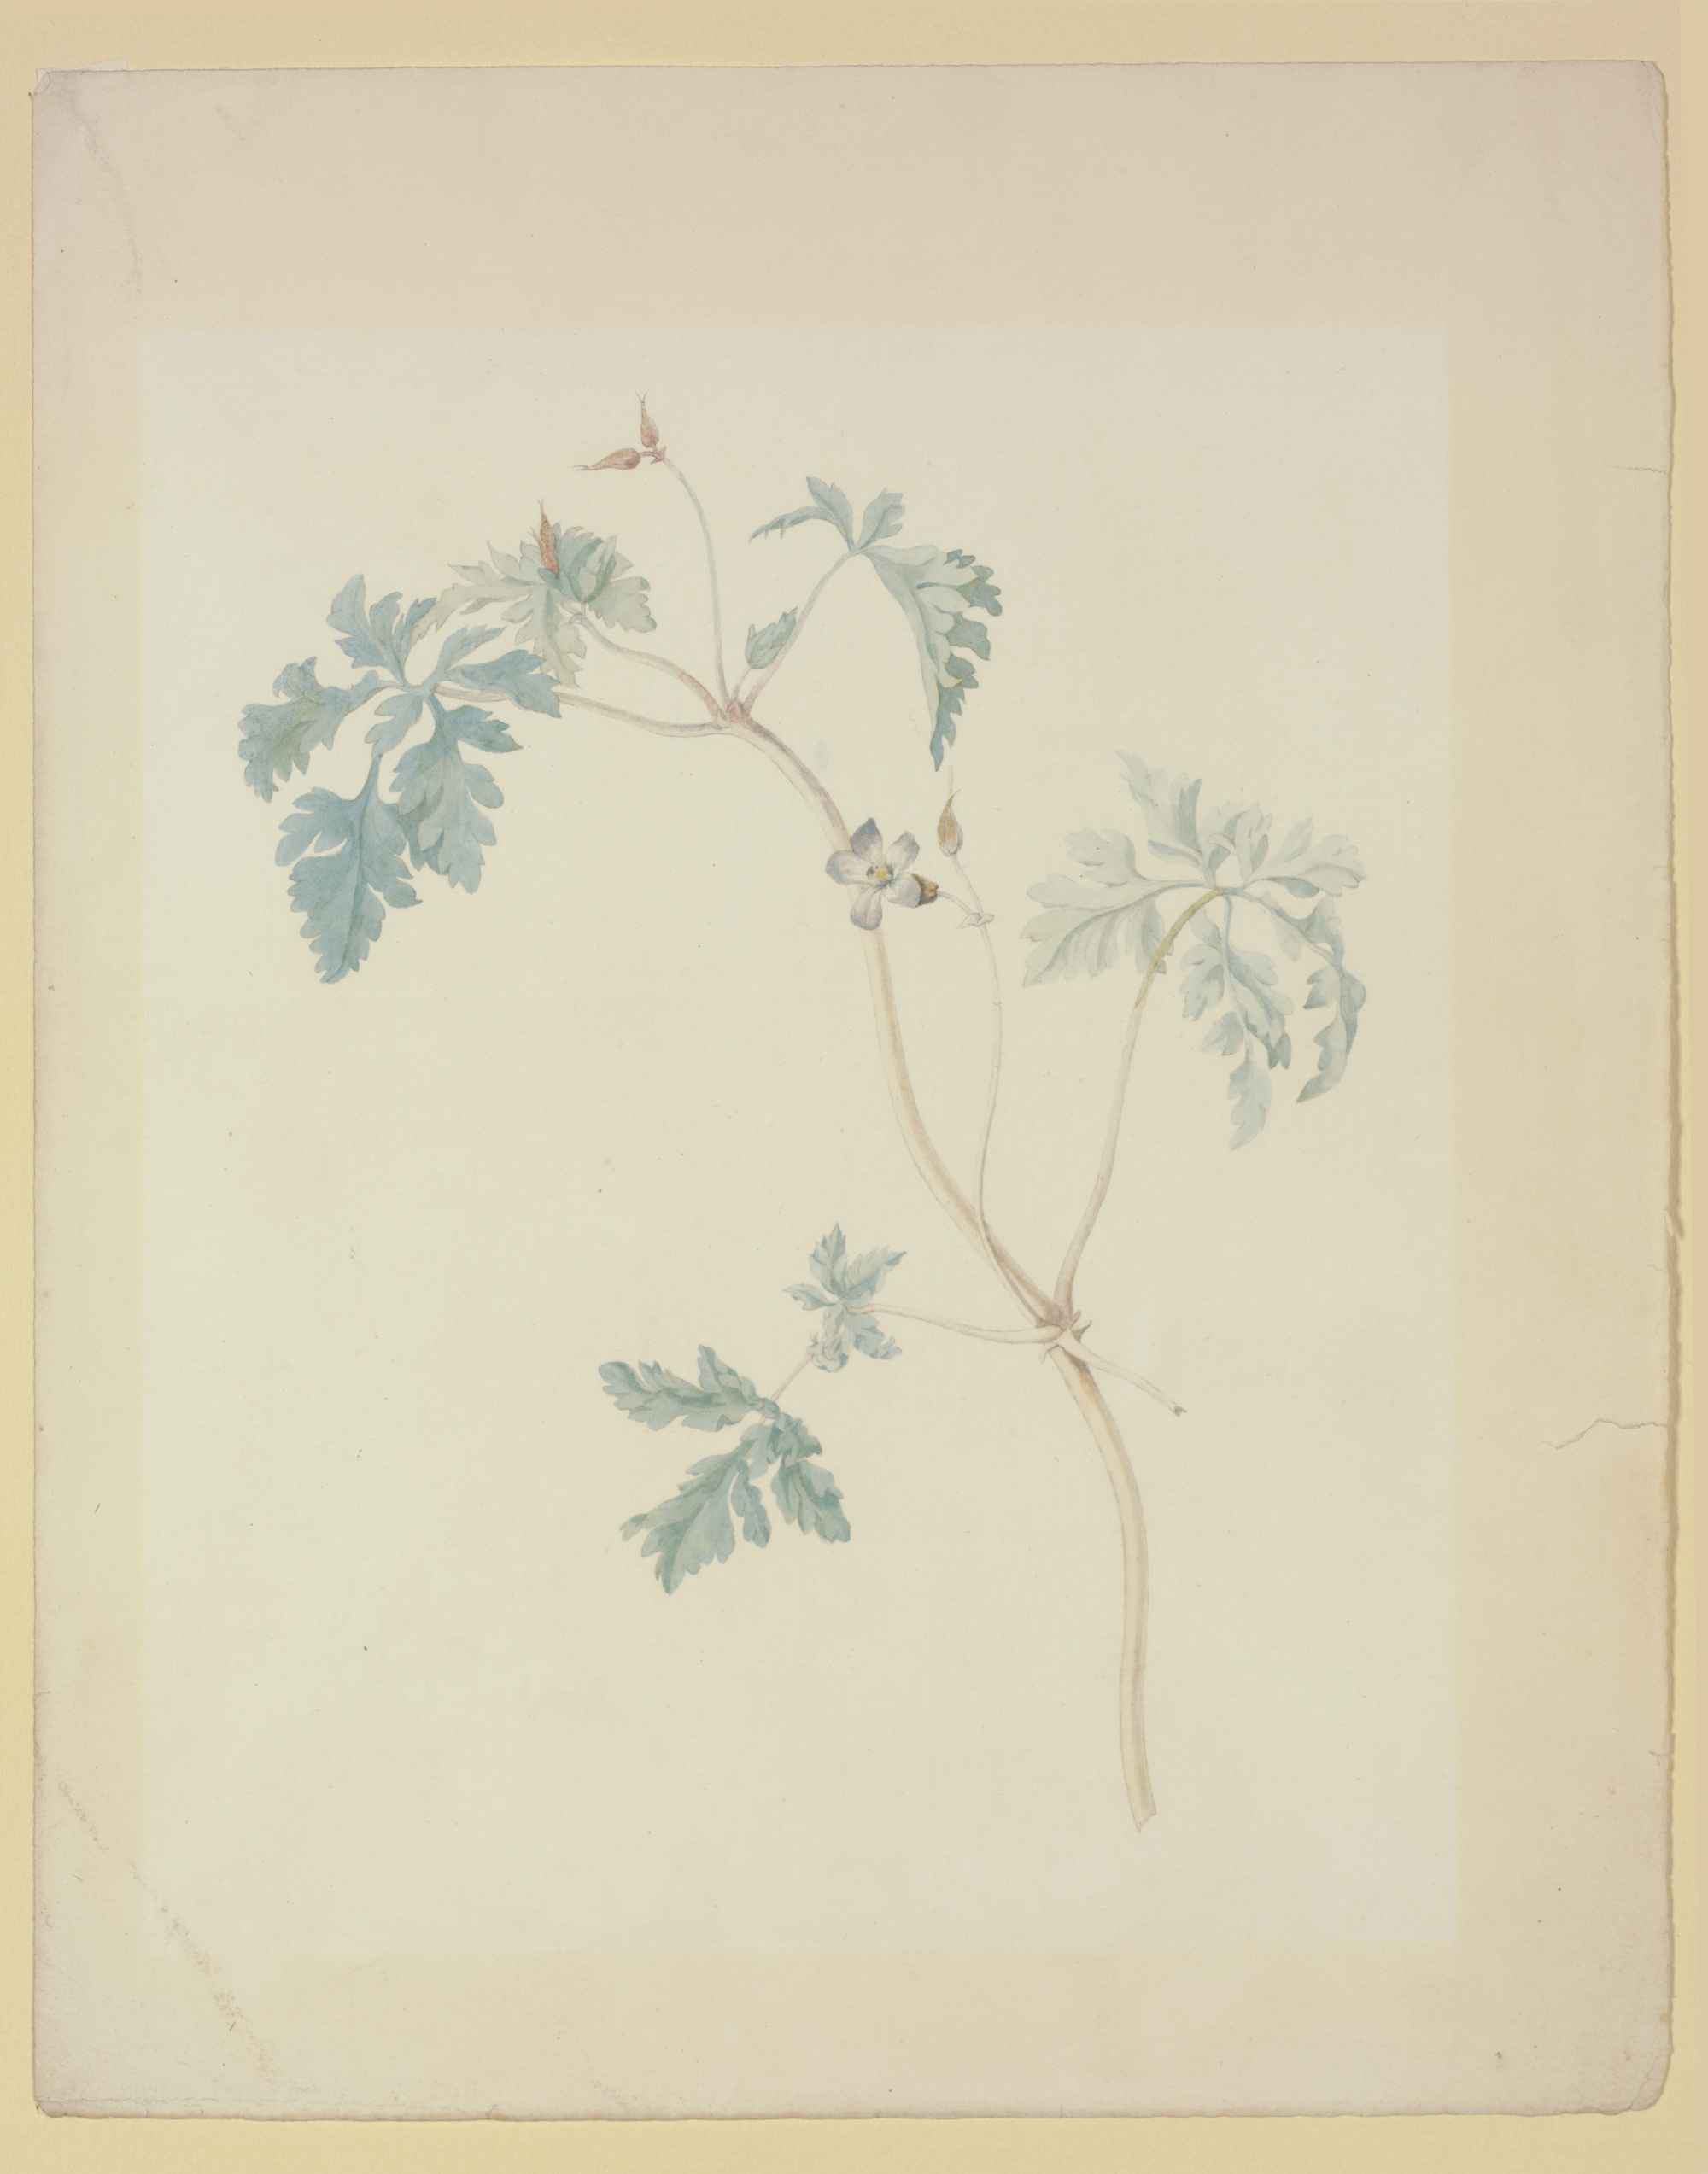 Geranium Robertianum (Herb Robert)